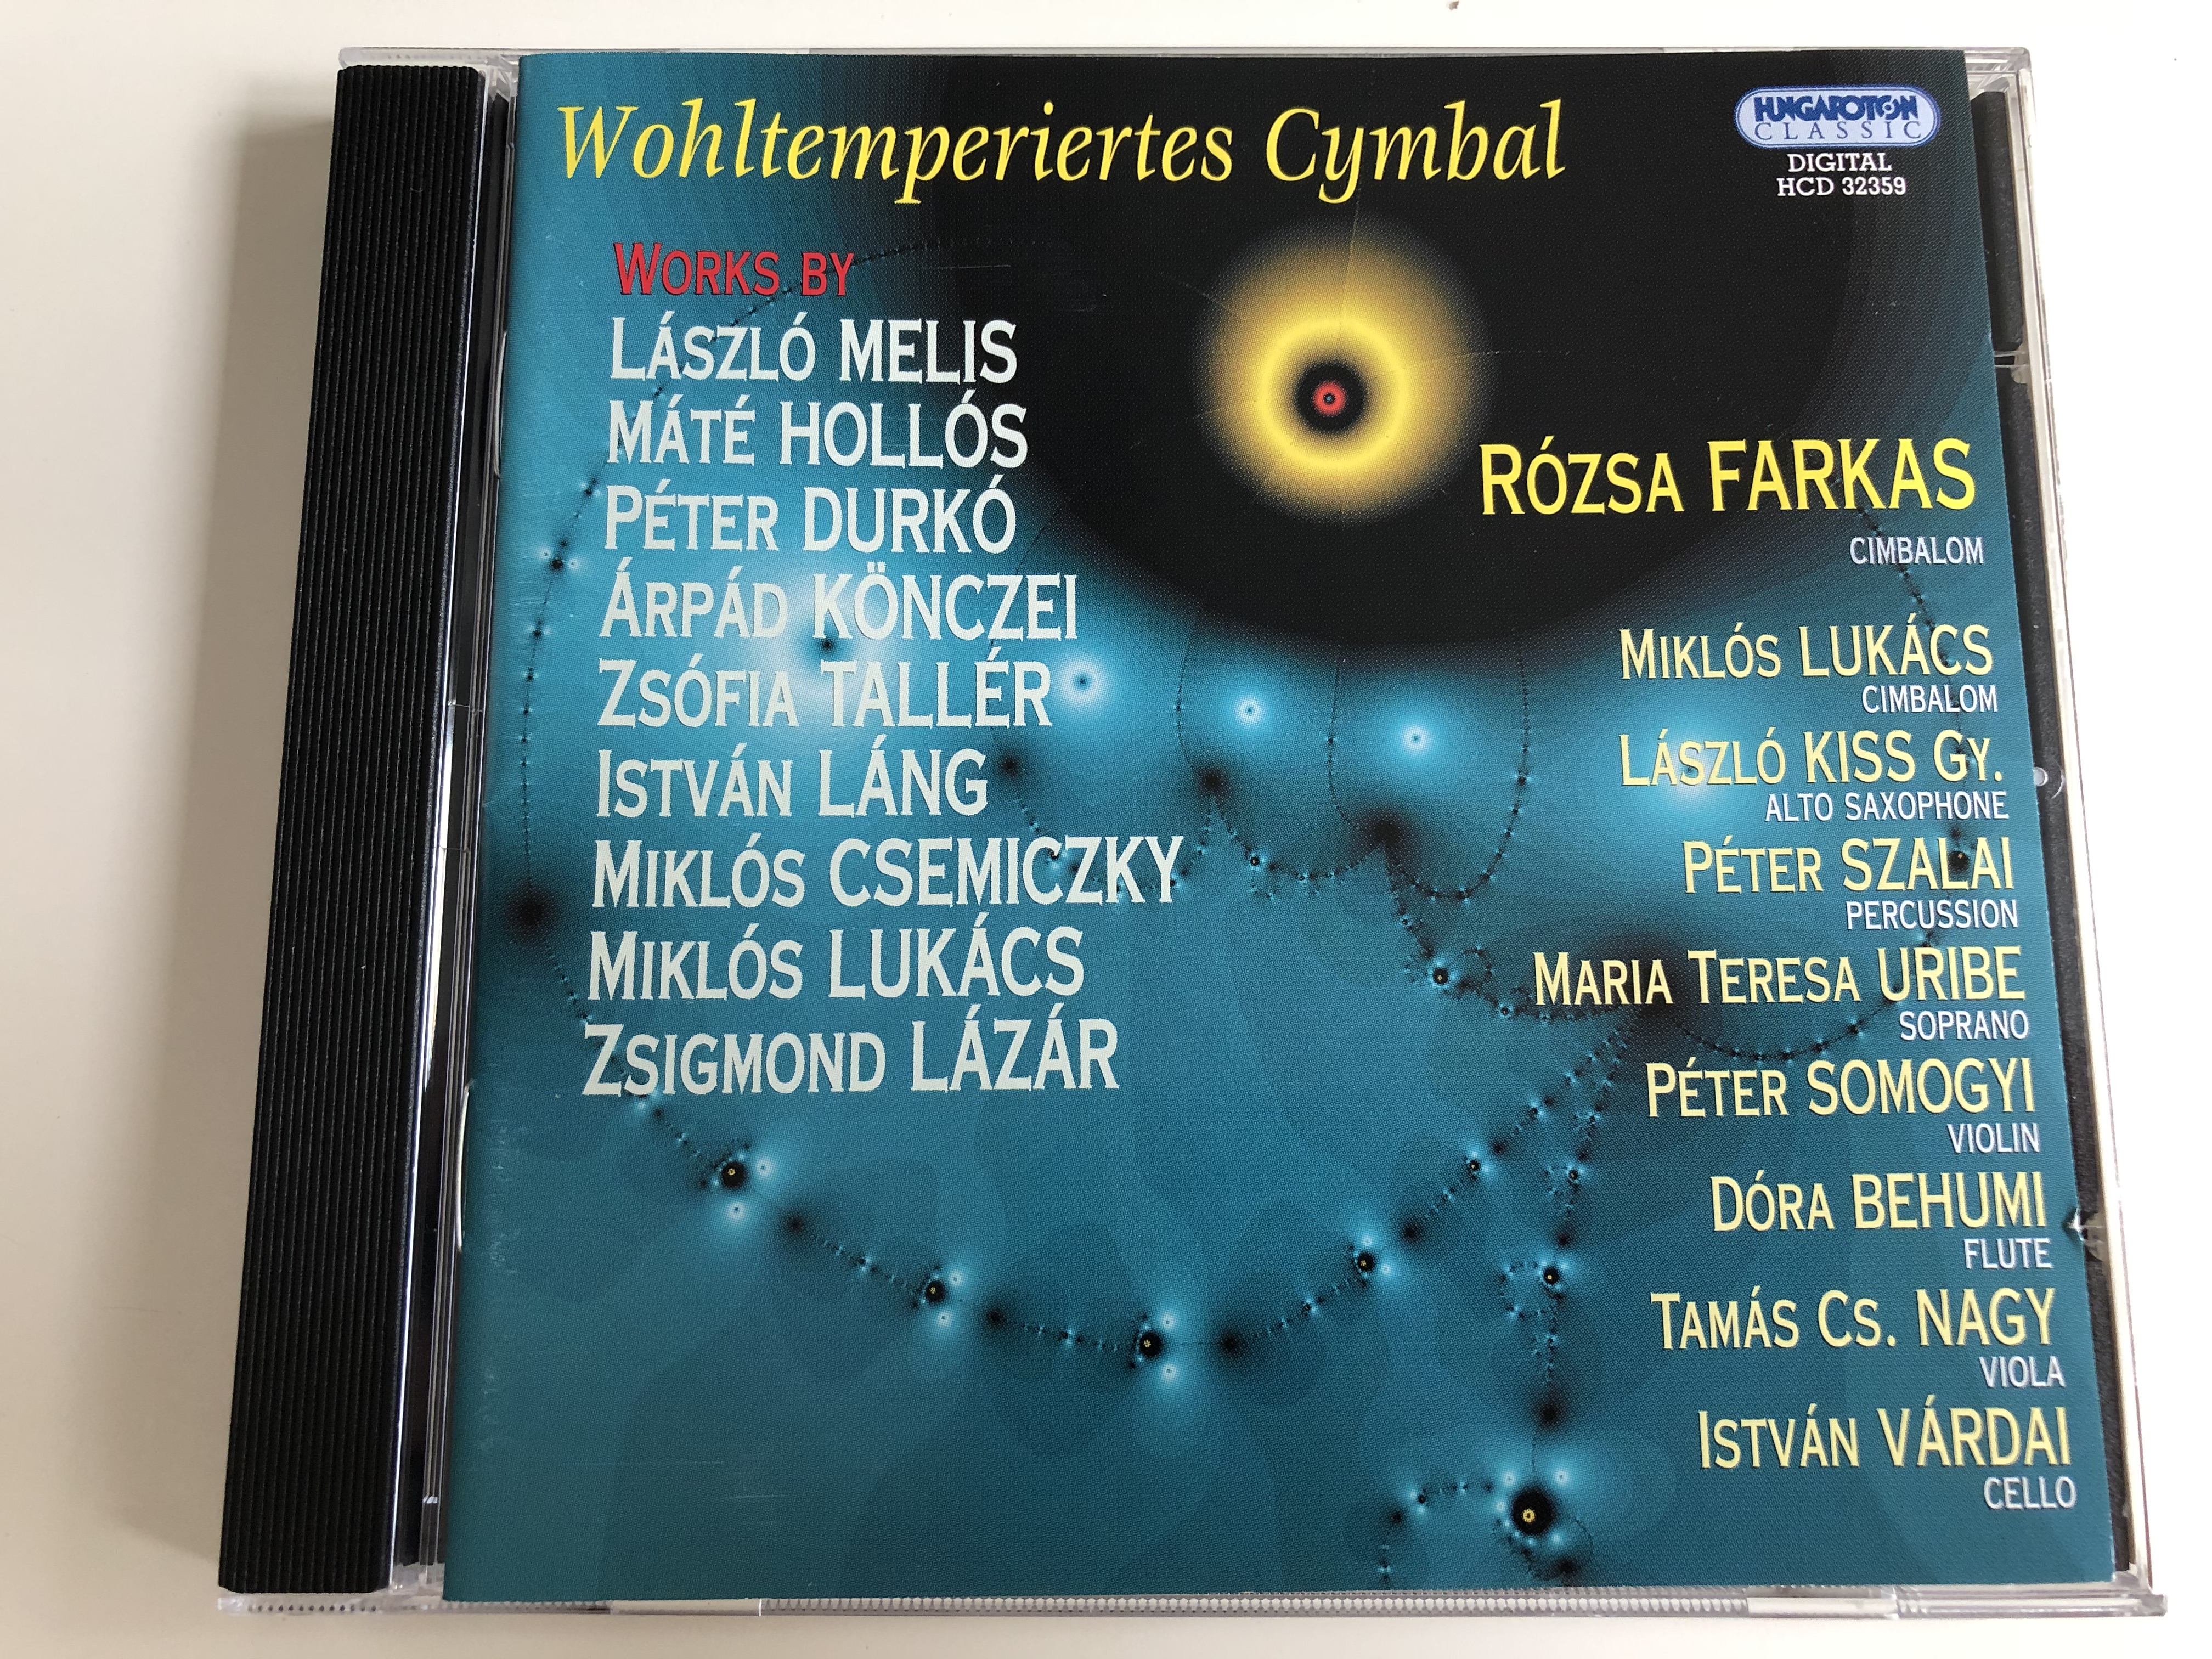 wohltemperiertes-cymbal-works-by-l-szl-melis-m-t-holl-s-p-ter-durk-rp-d-k-nczei-zs-fia-tall-r-istv-n-l-ng-r-zsa-farkas-cimbalom-hcd-32359-audio-cd-2006-1-.jpg